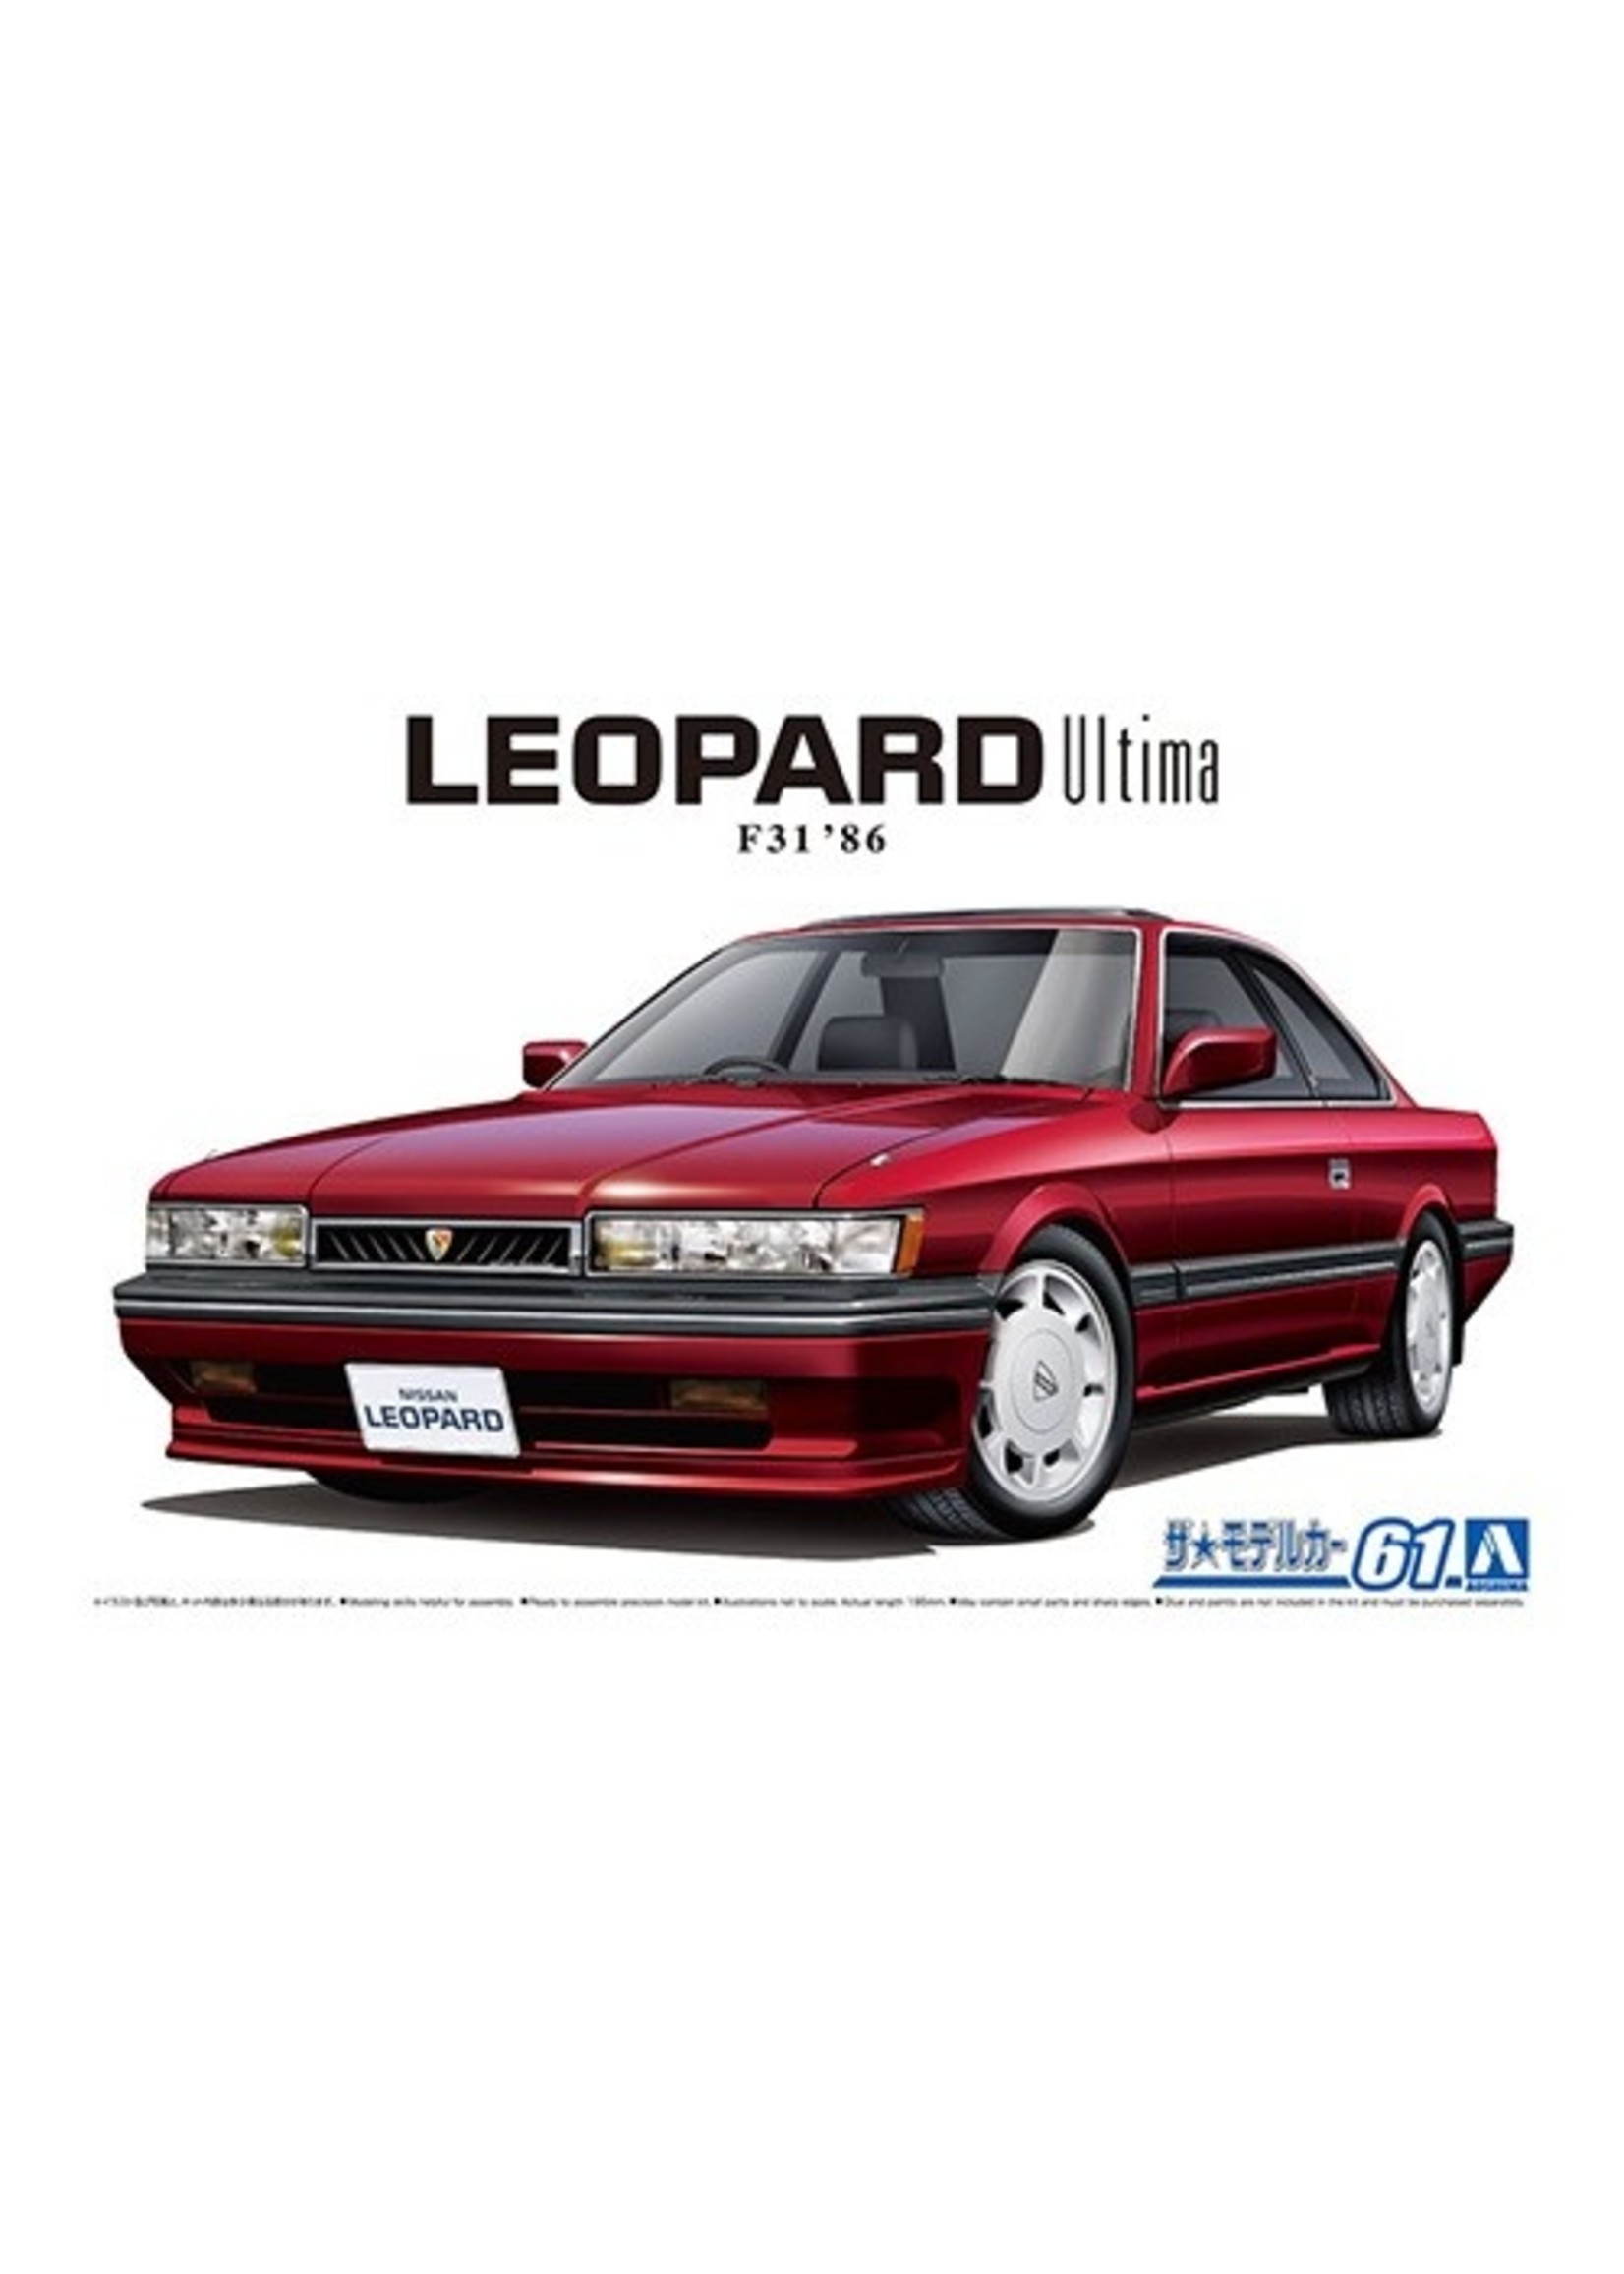 Aoshima 06109 - 1/24 '86 Nissan UF31 Leopard 3.0 Ultima